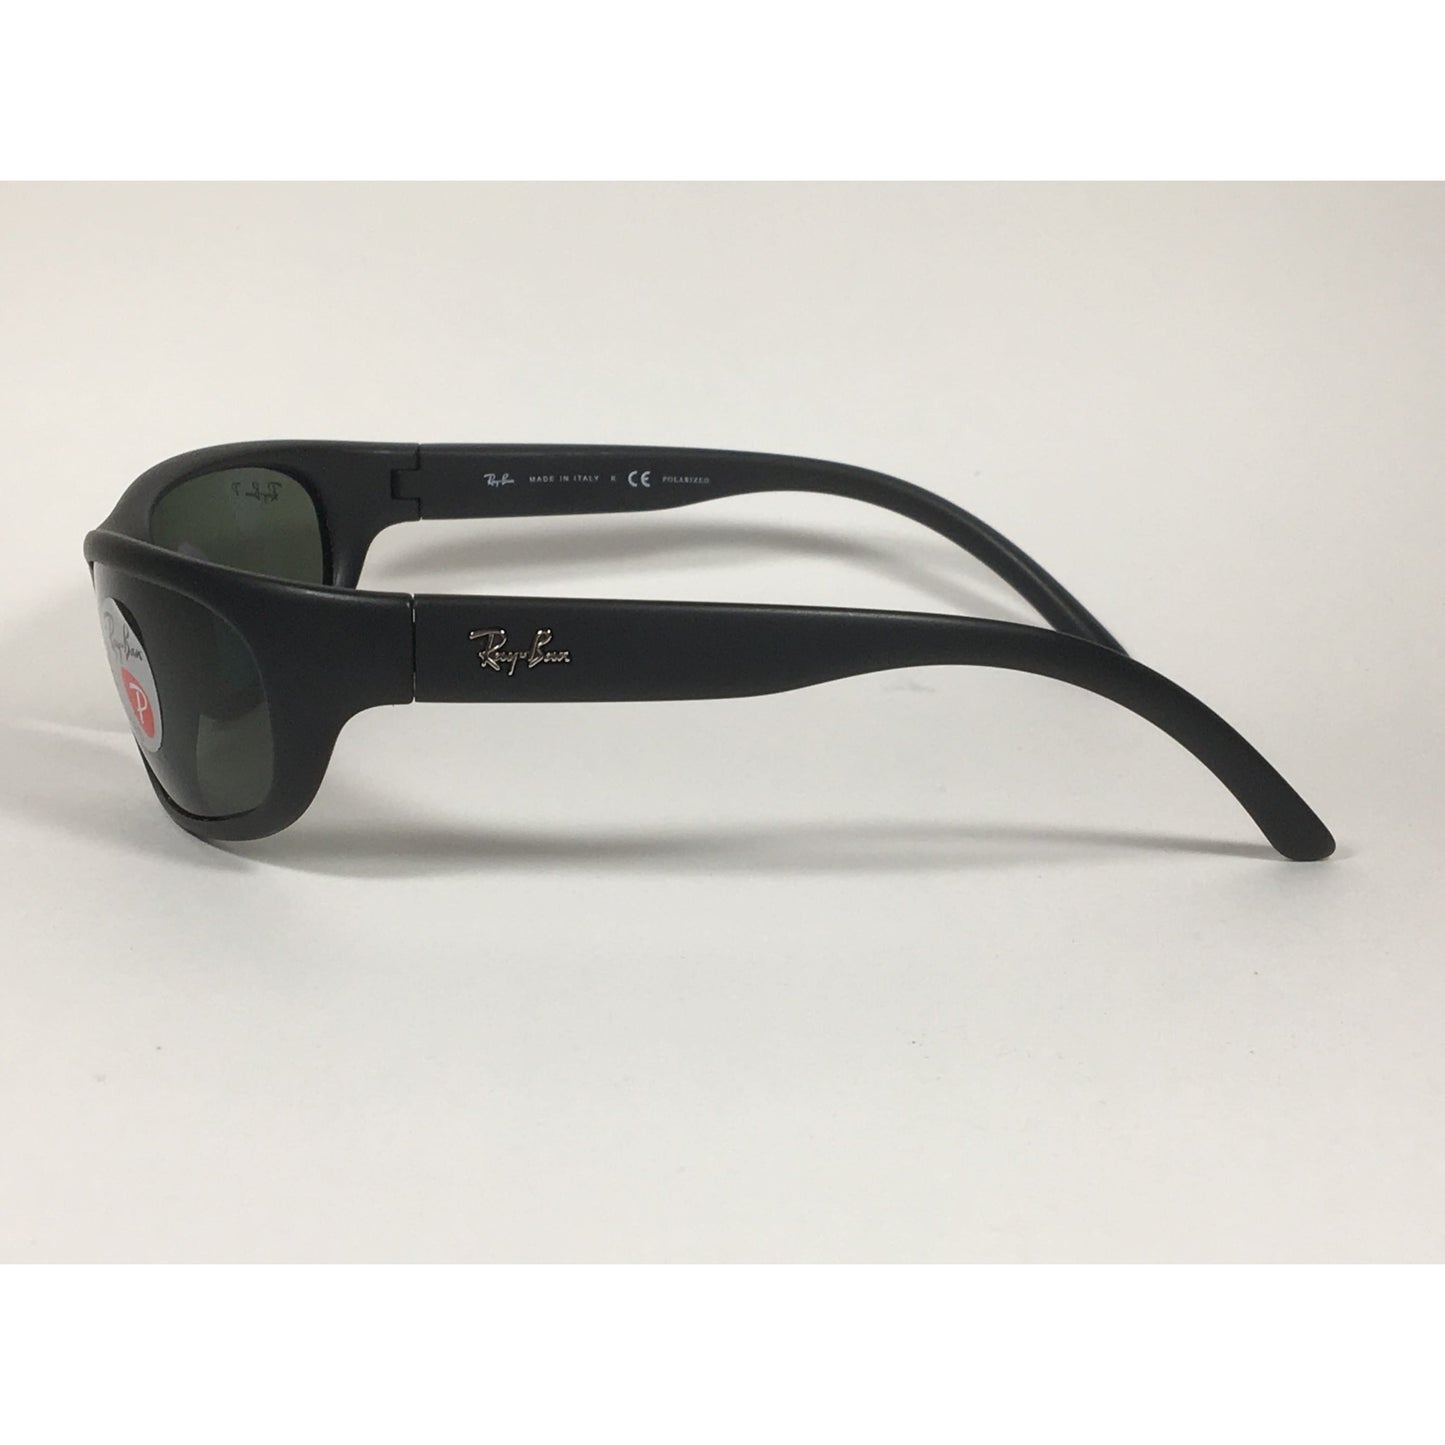 Ray-Ban Predator Polarized Sunglasses Matte Black Green Lens RB4033 601-S/48 - Sunglasses